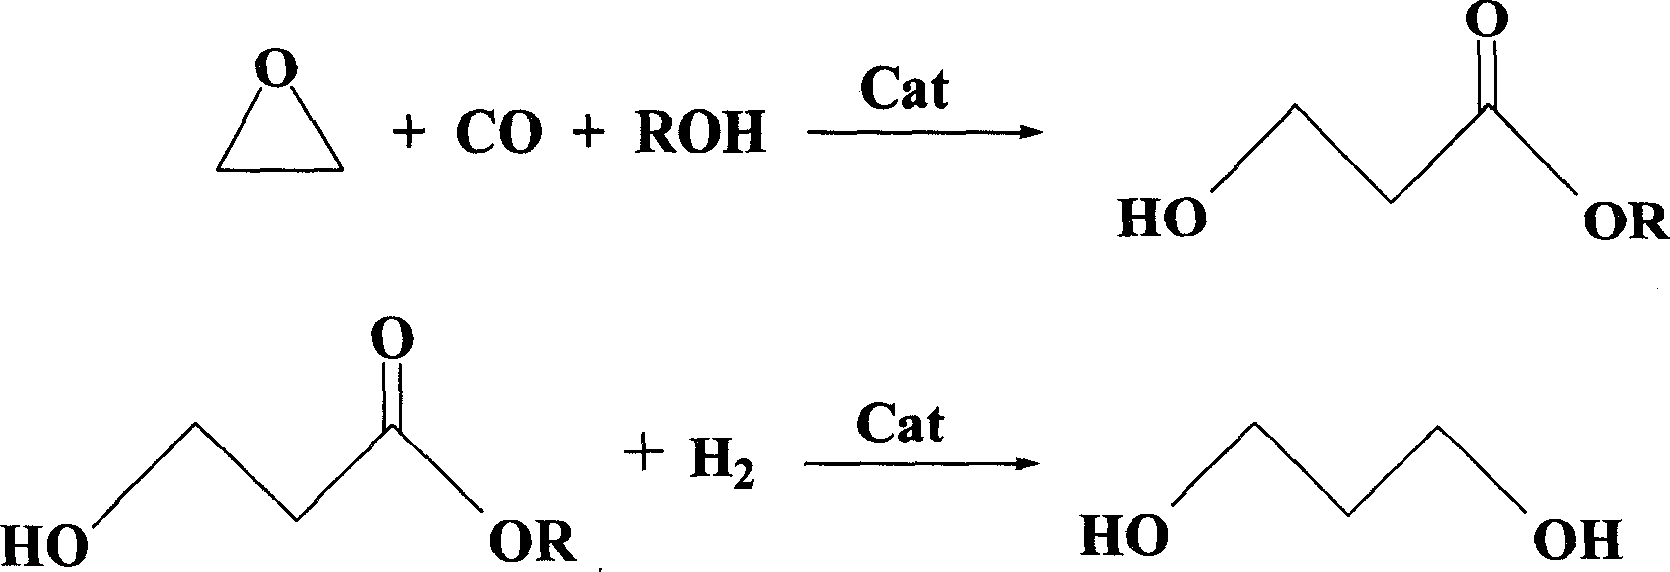 Prepn process of 3-hydroxy propionate and propylene glycol